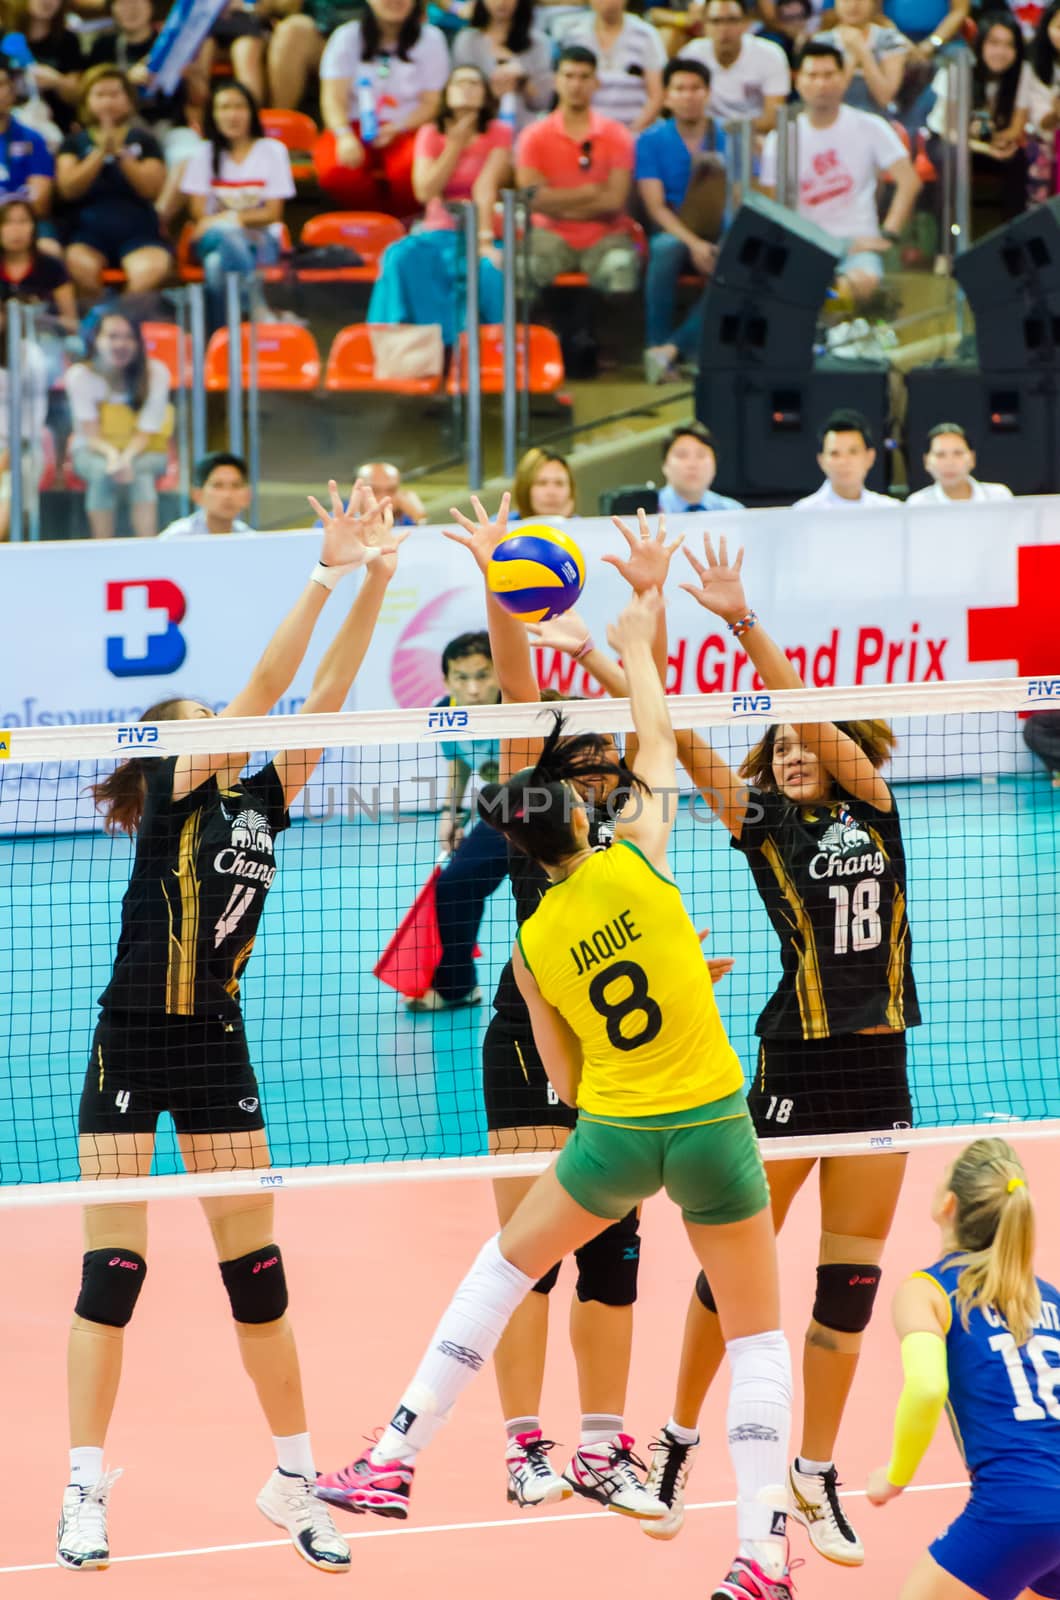 Volleyball World Grand Prix 2014 by chatchai